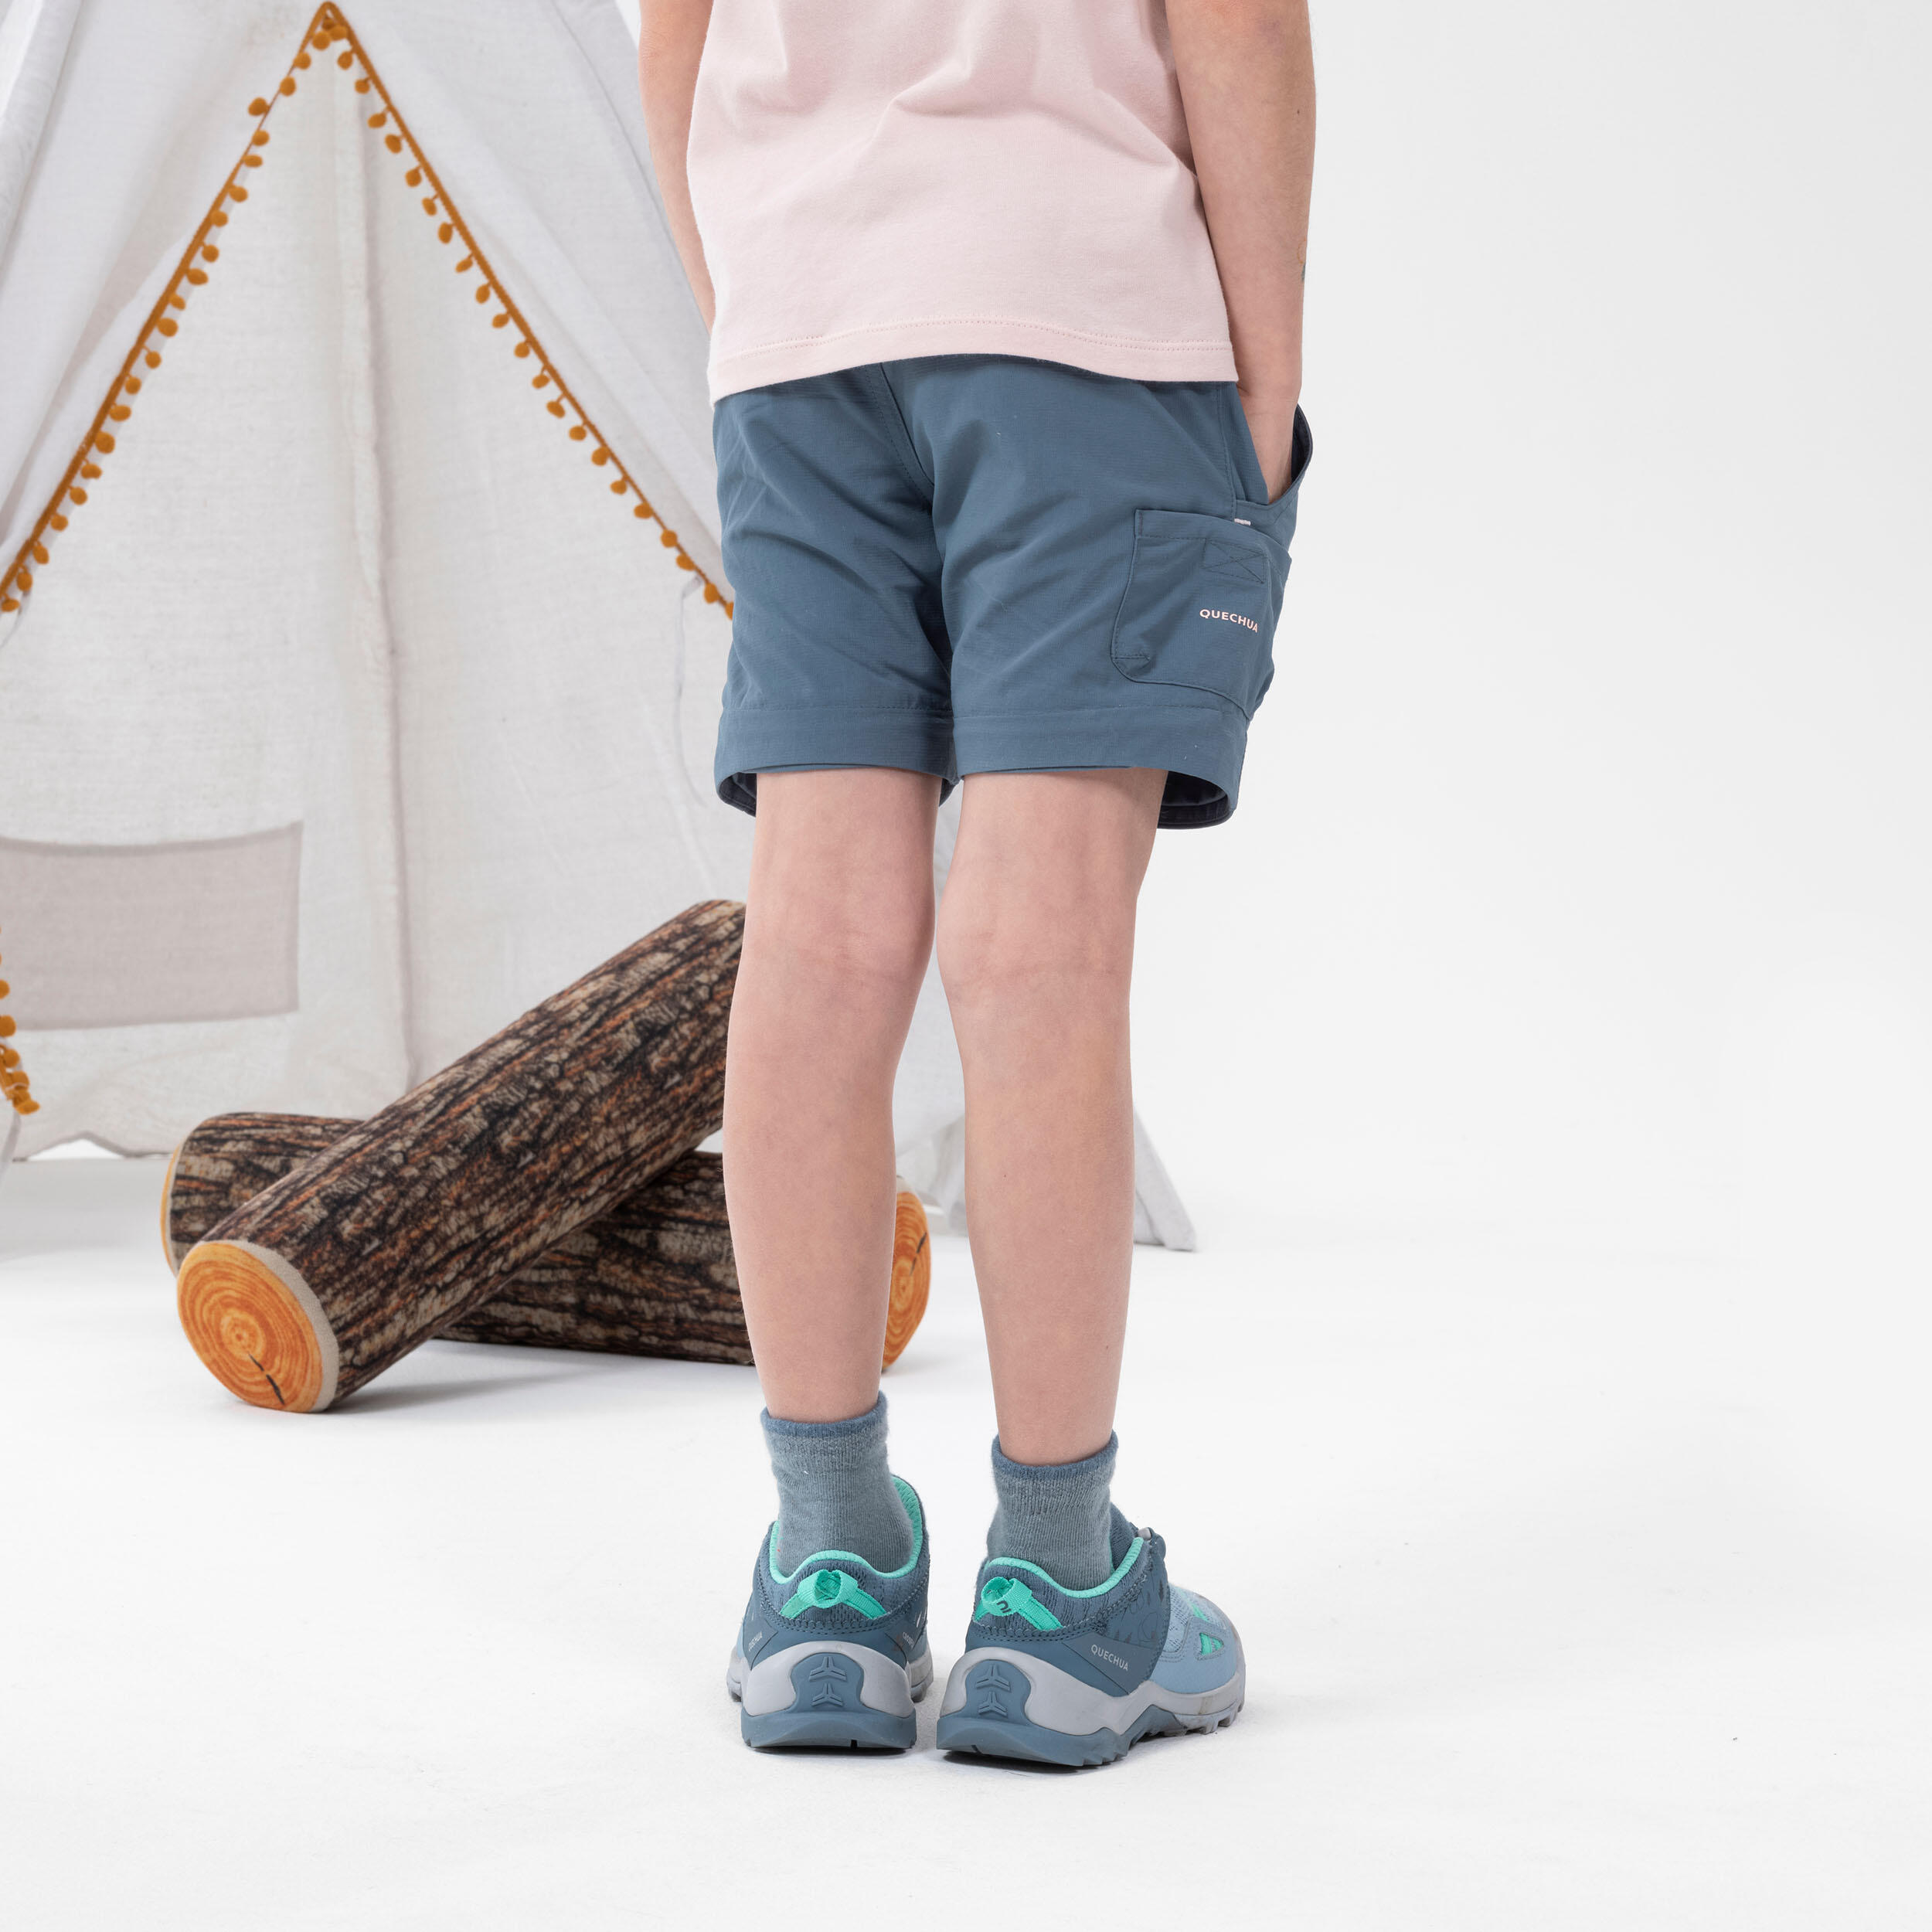 Kids’ Modular Hiking Trousers - MH500 KID Aged 2-6 YEARS 5/6